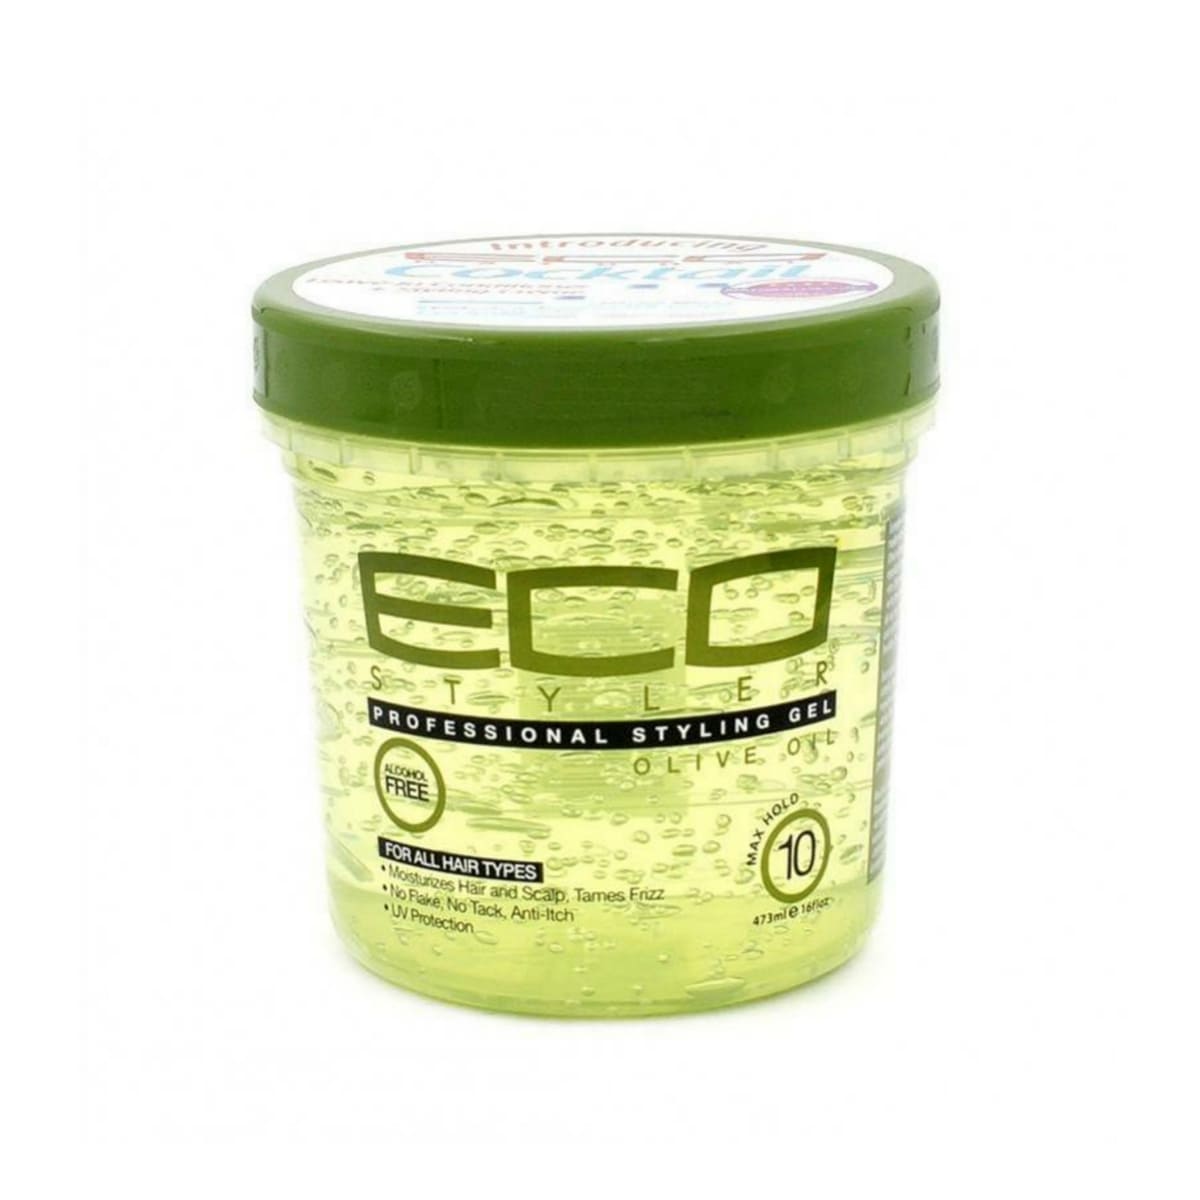 comprar-cosmetico-vegano-gel-styling-olive-oil-ecostyler-metodo-curly-trenzas-crochet-pelucas-www.muerebella.com